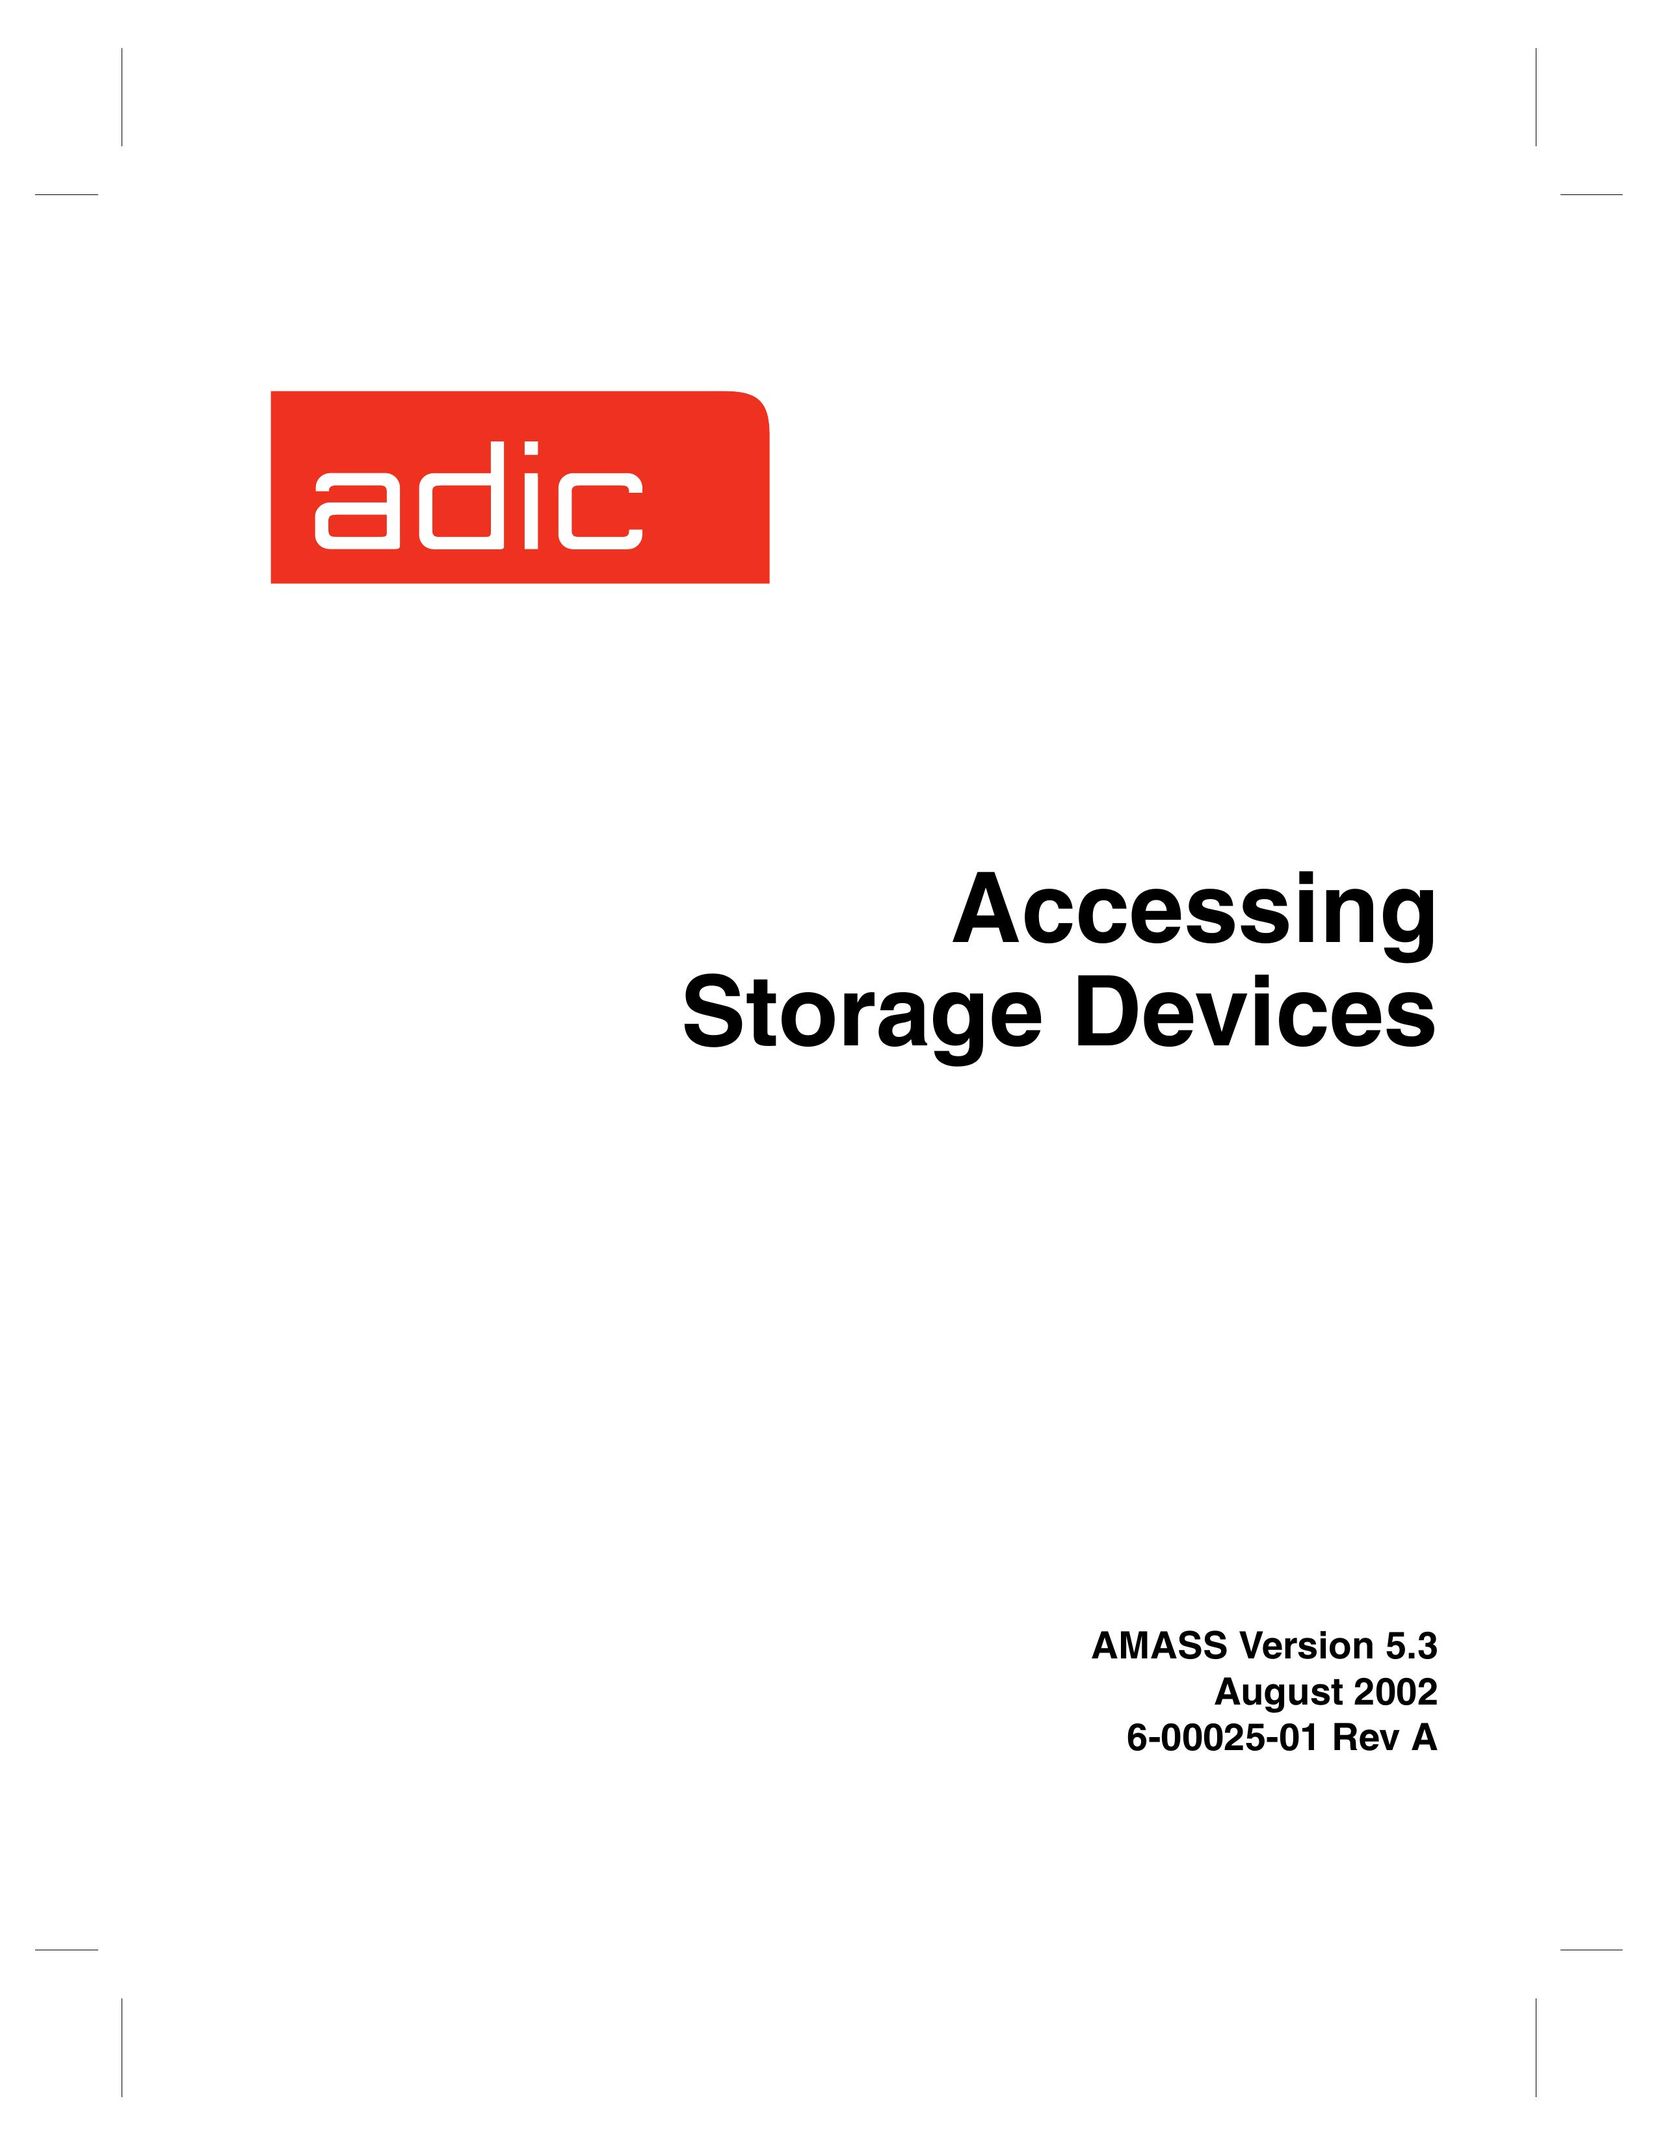 ADIC 6-00025-01 Tool Storage User Manual